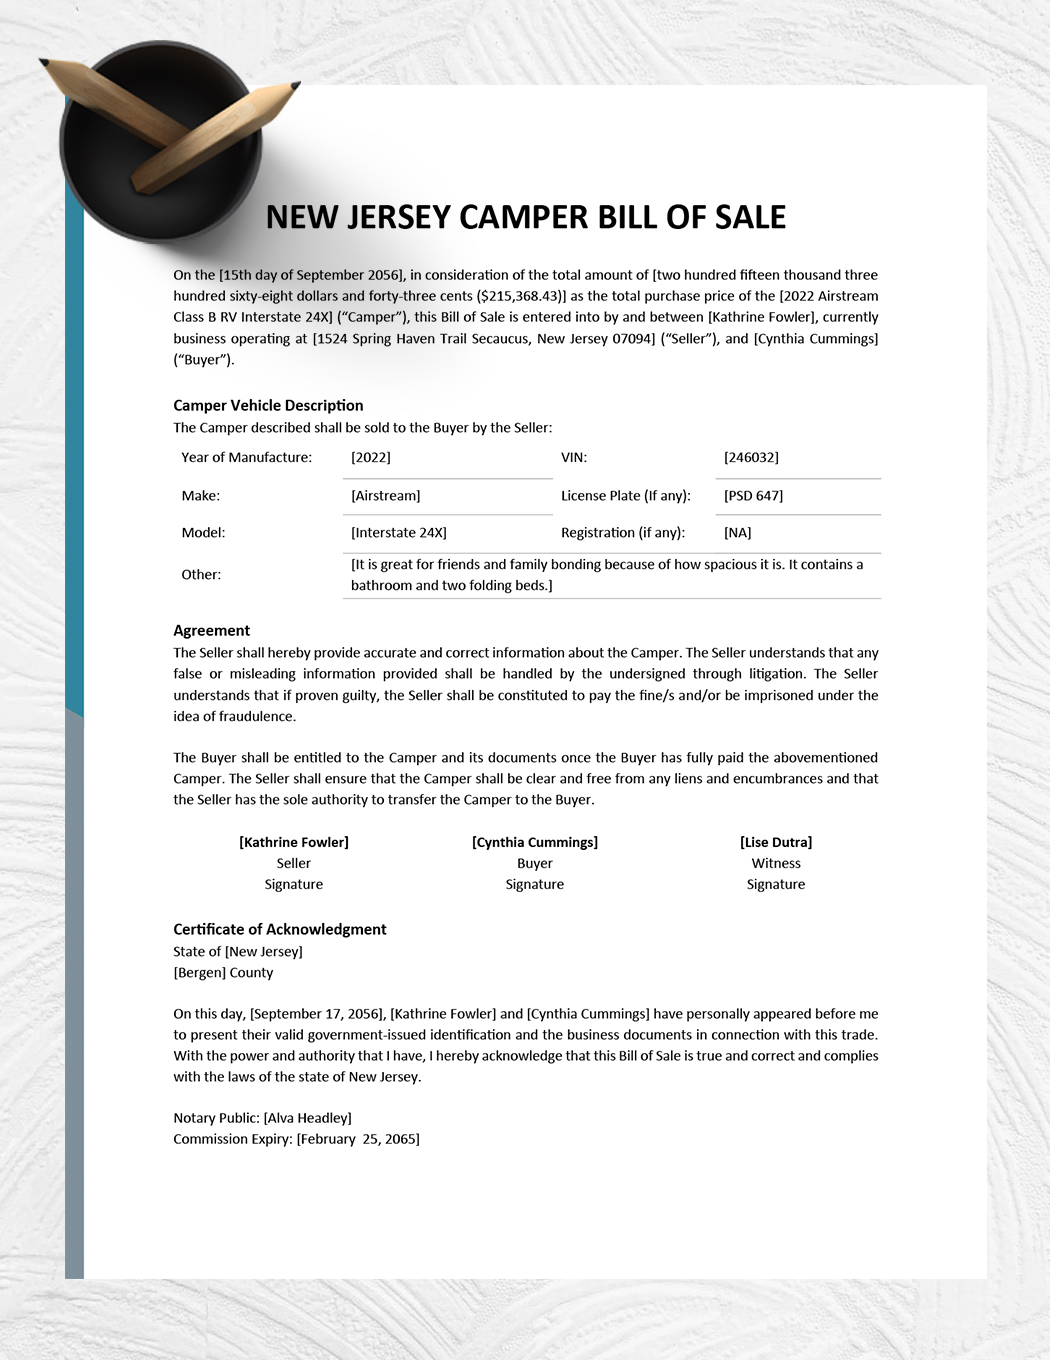 New Jersey Camper Bill of Sale Template